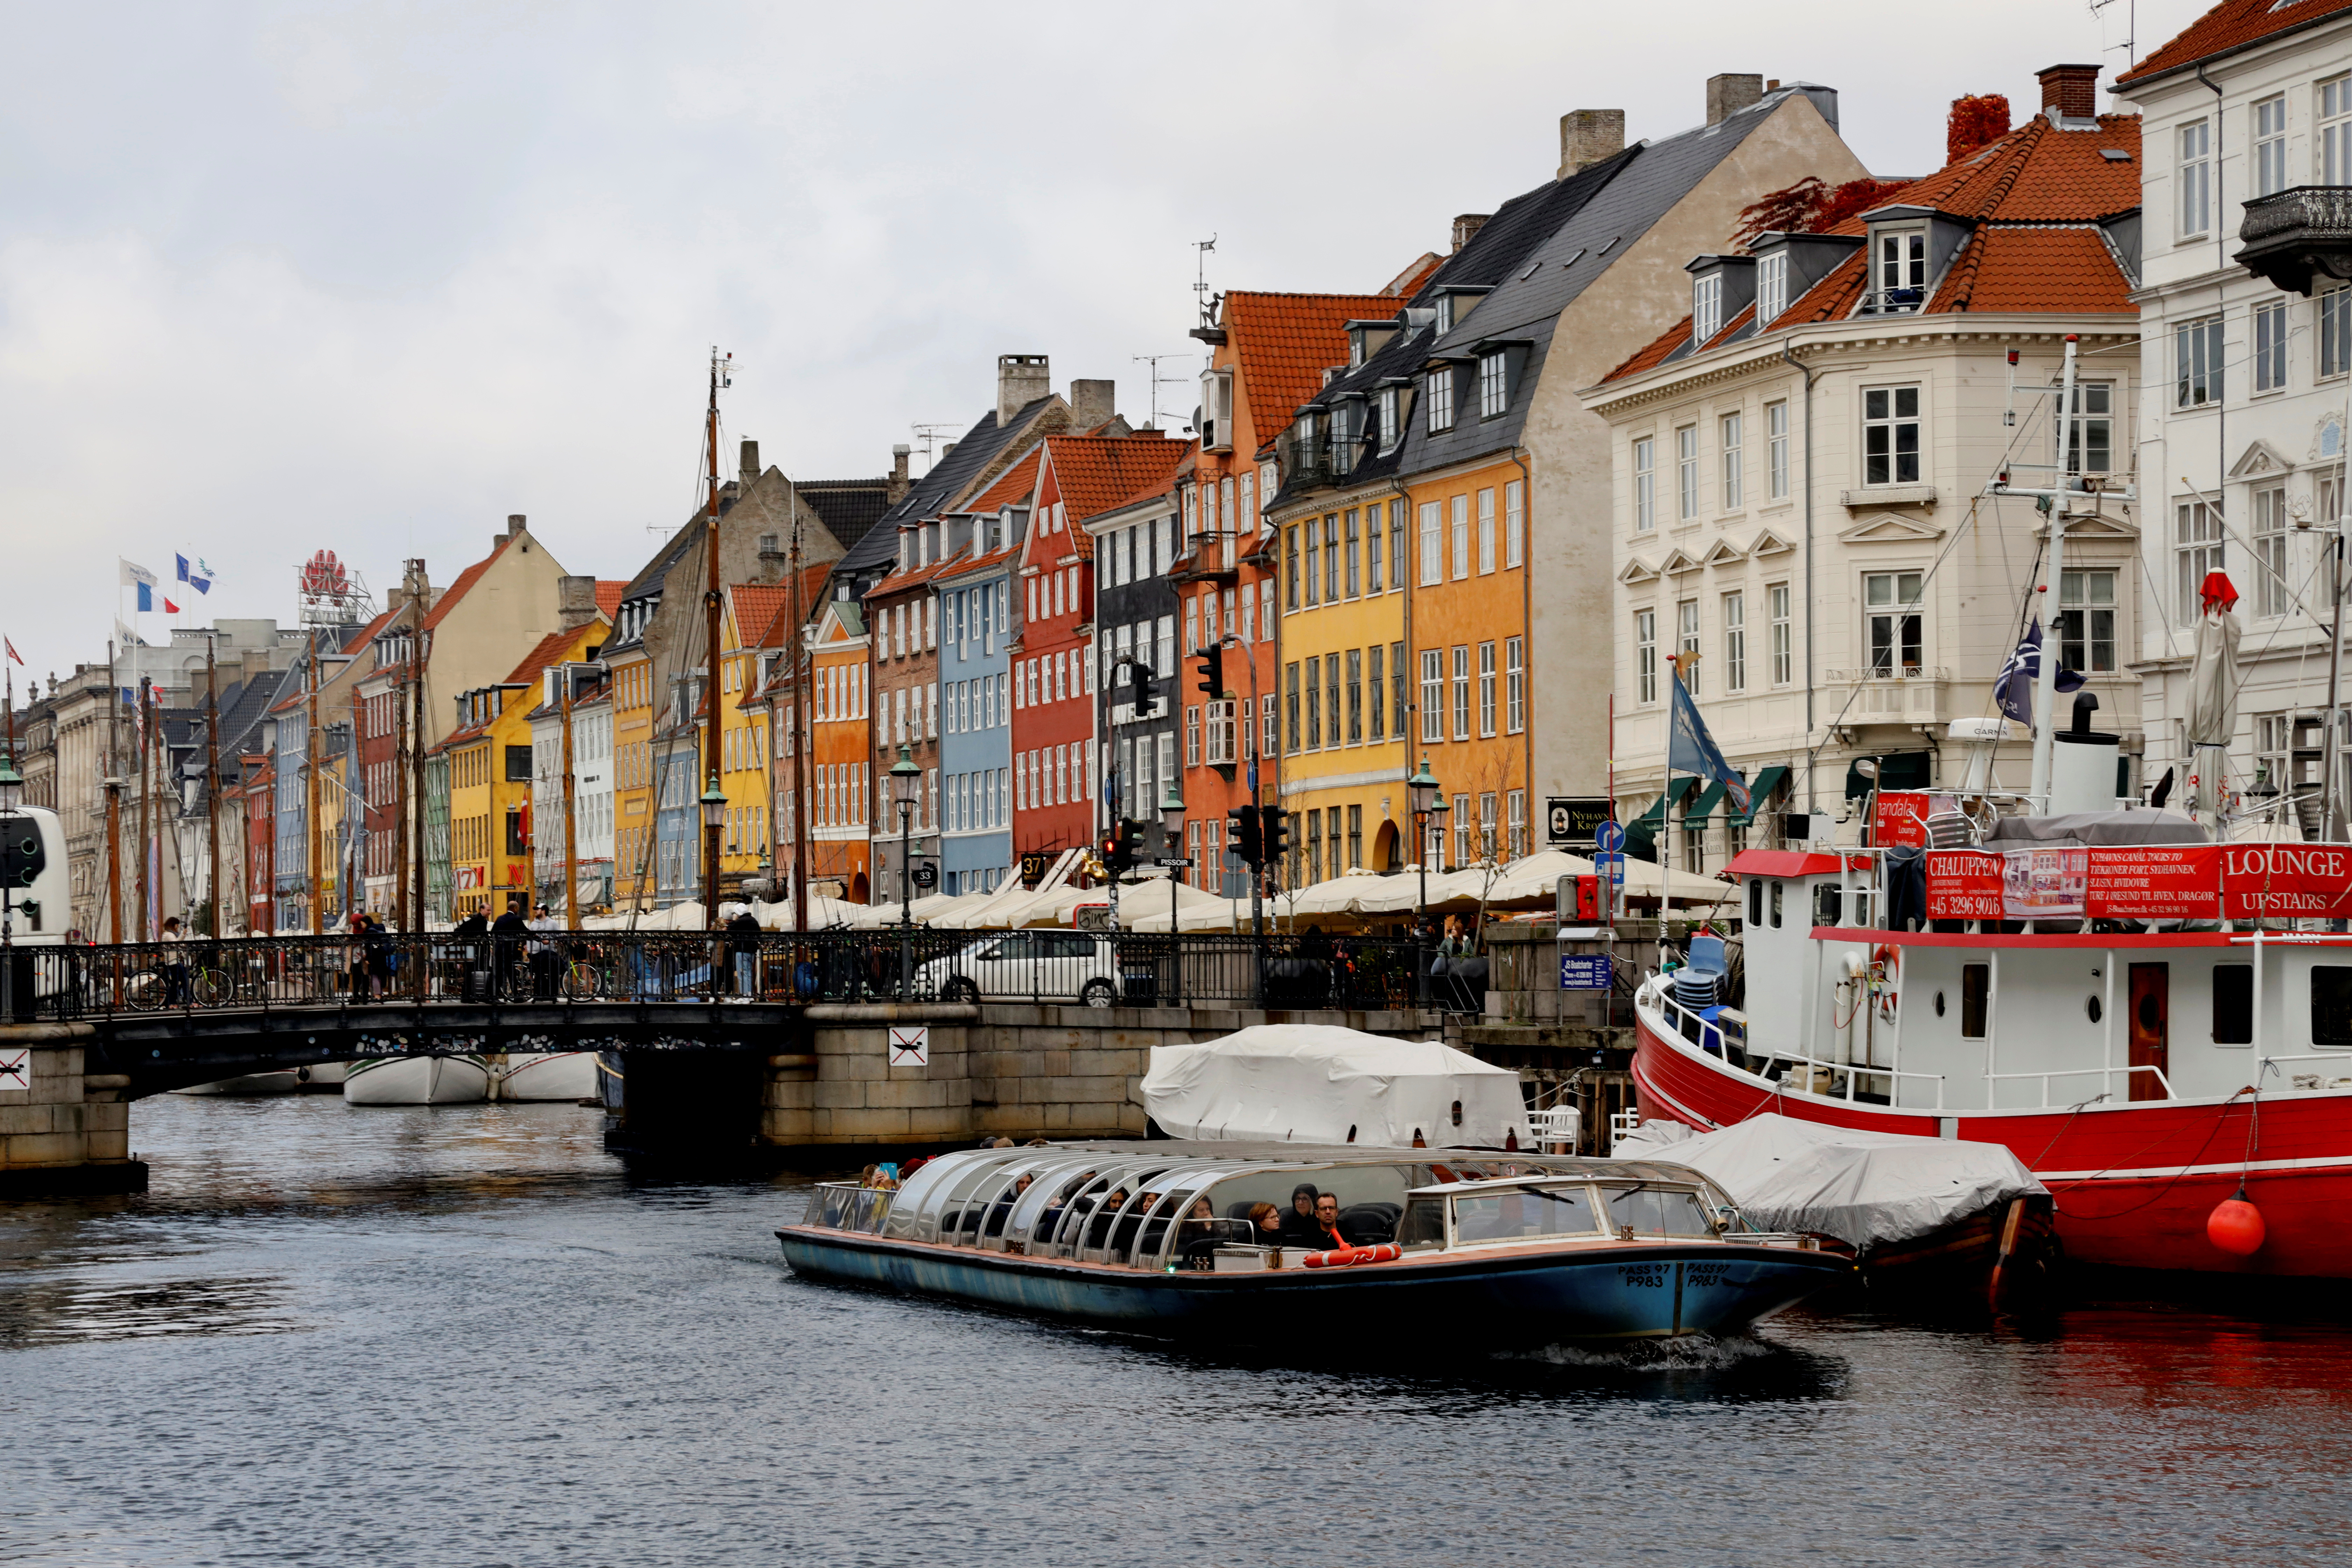 A view of the Nyhavn district in Copenhagen